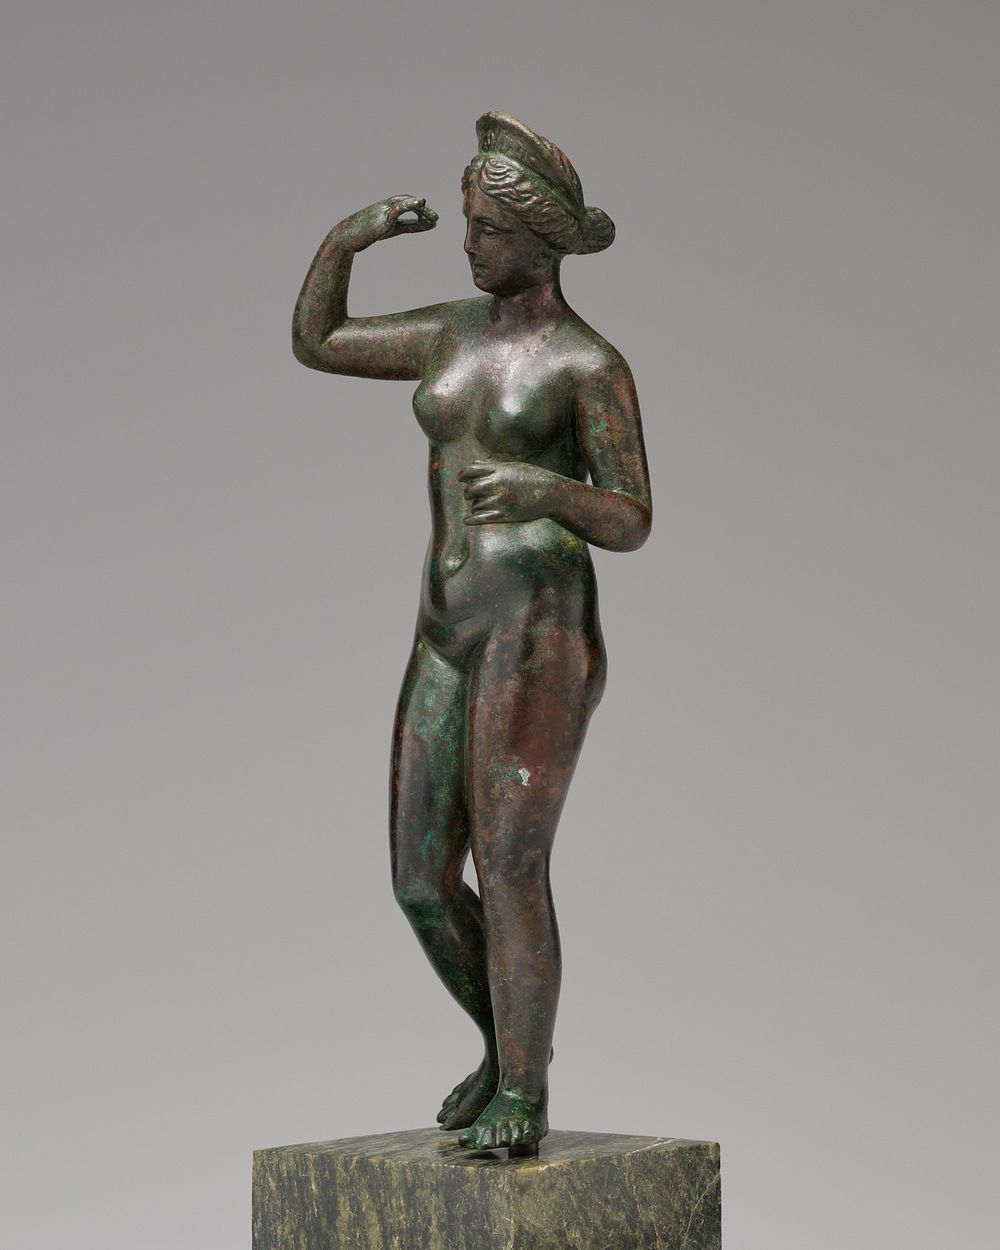 Statuette of Venus by Ancient Roman